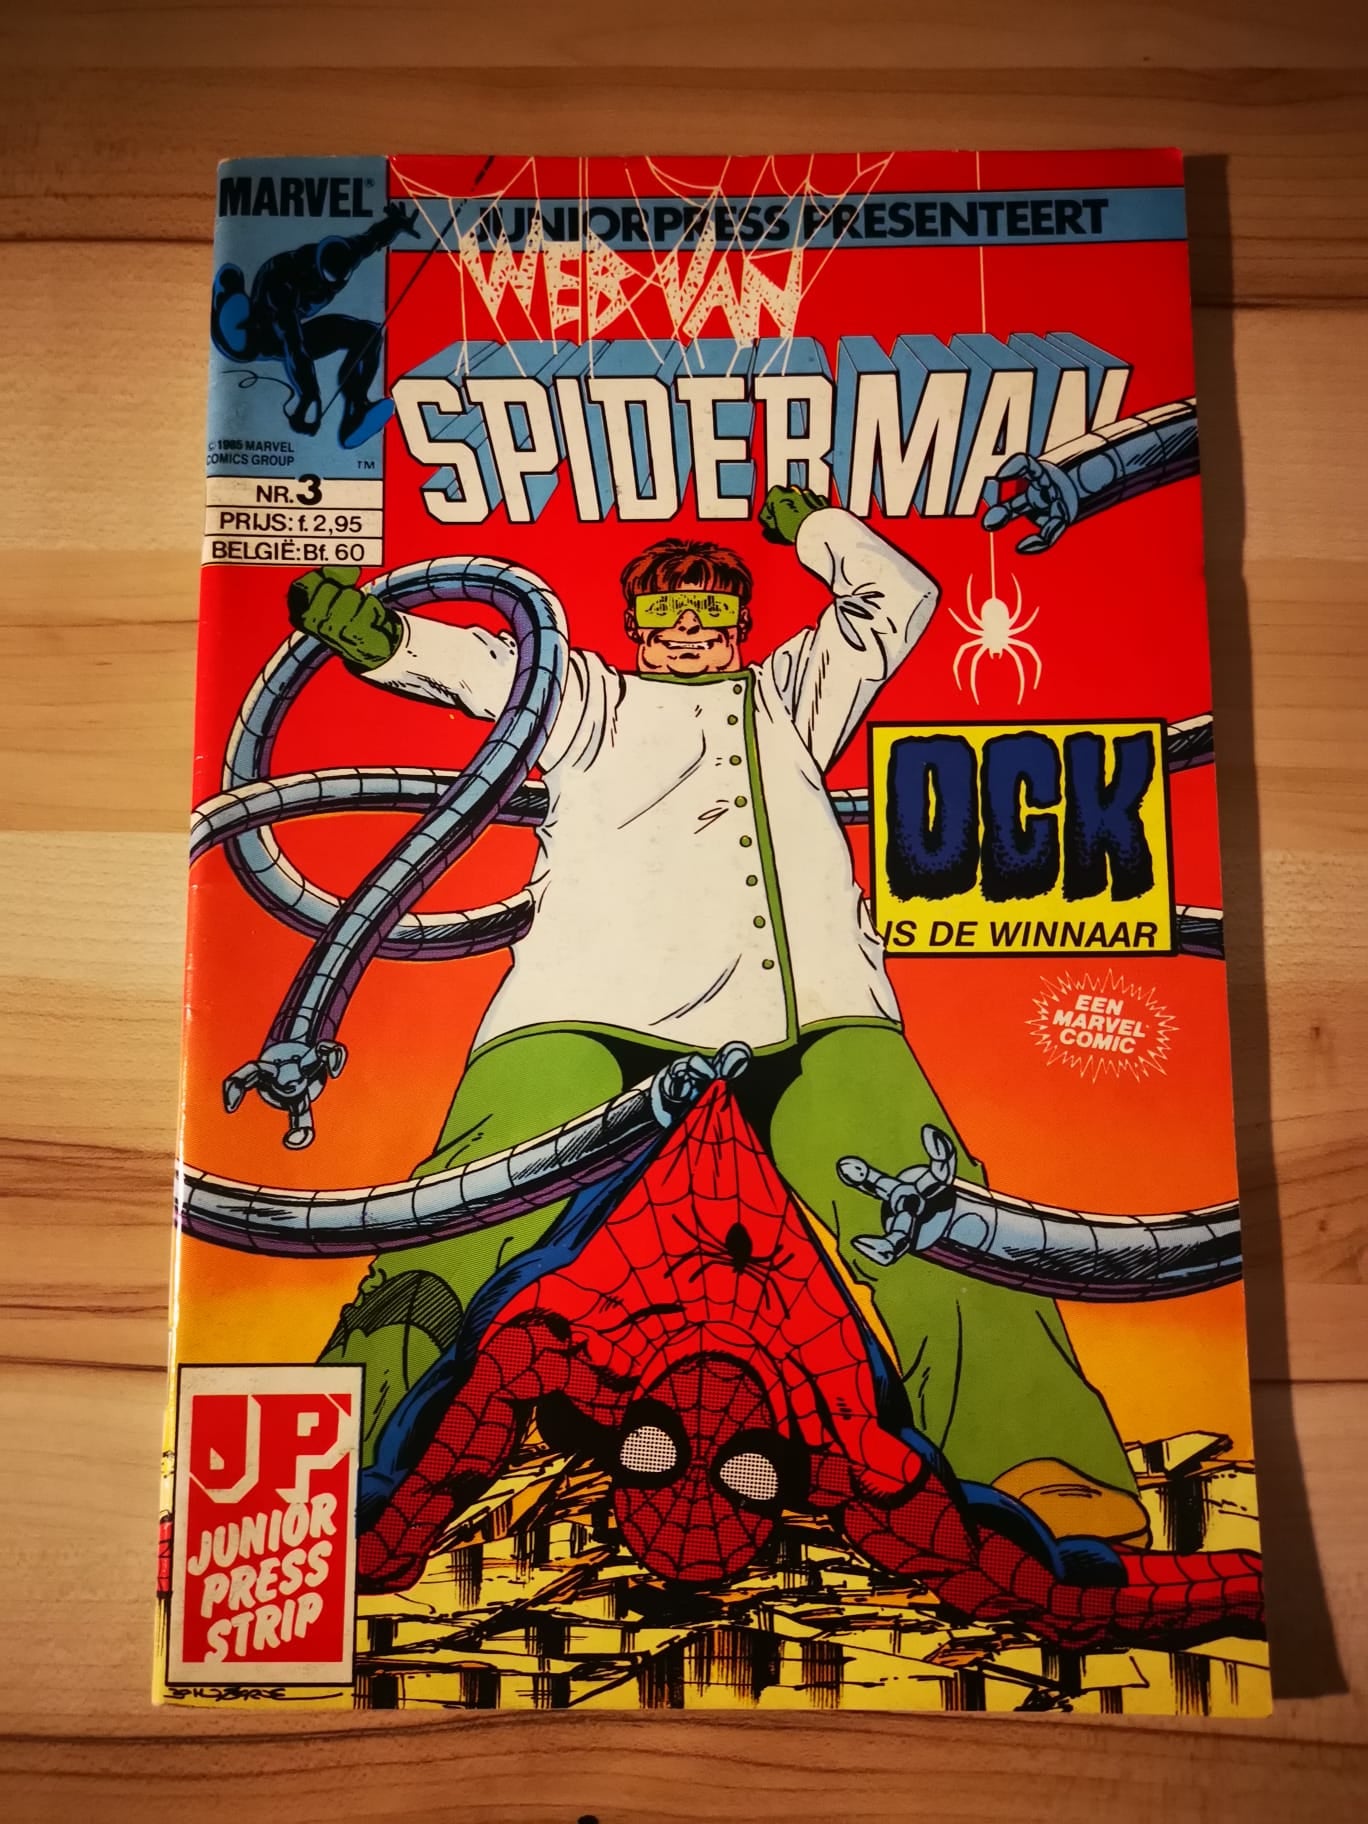 Web van spiderman #3